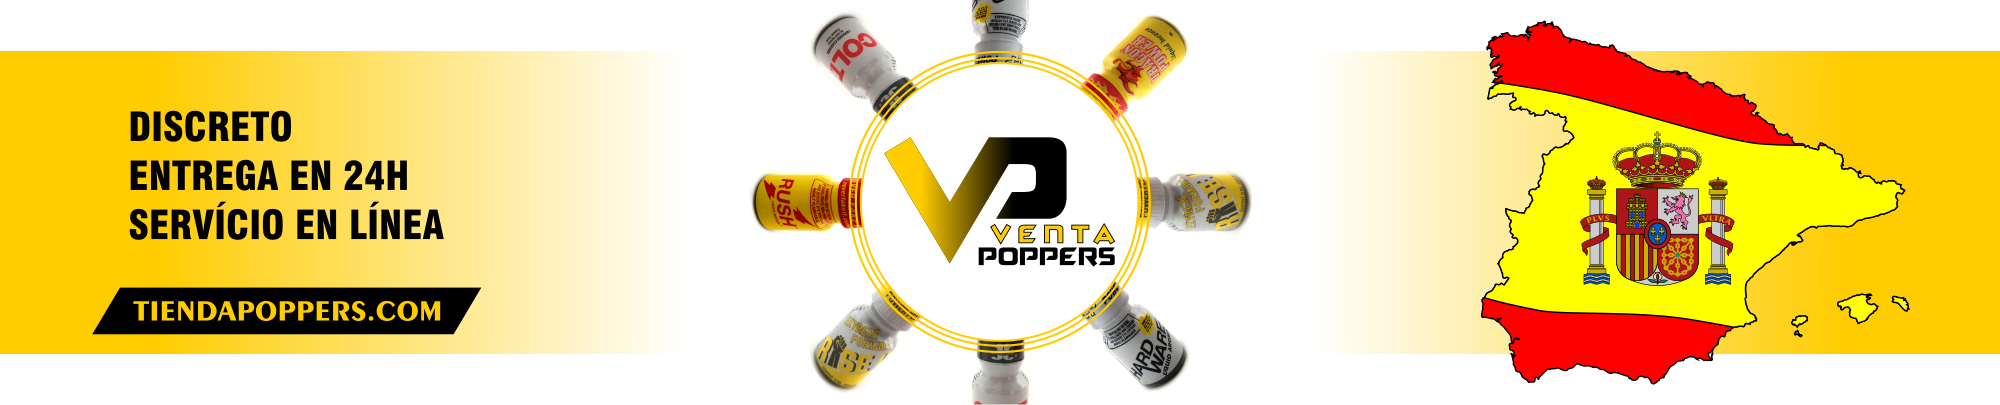 Venta Poppers - Tienda Poppers online España